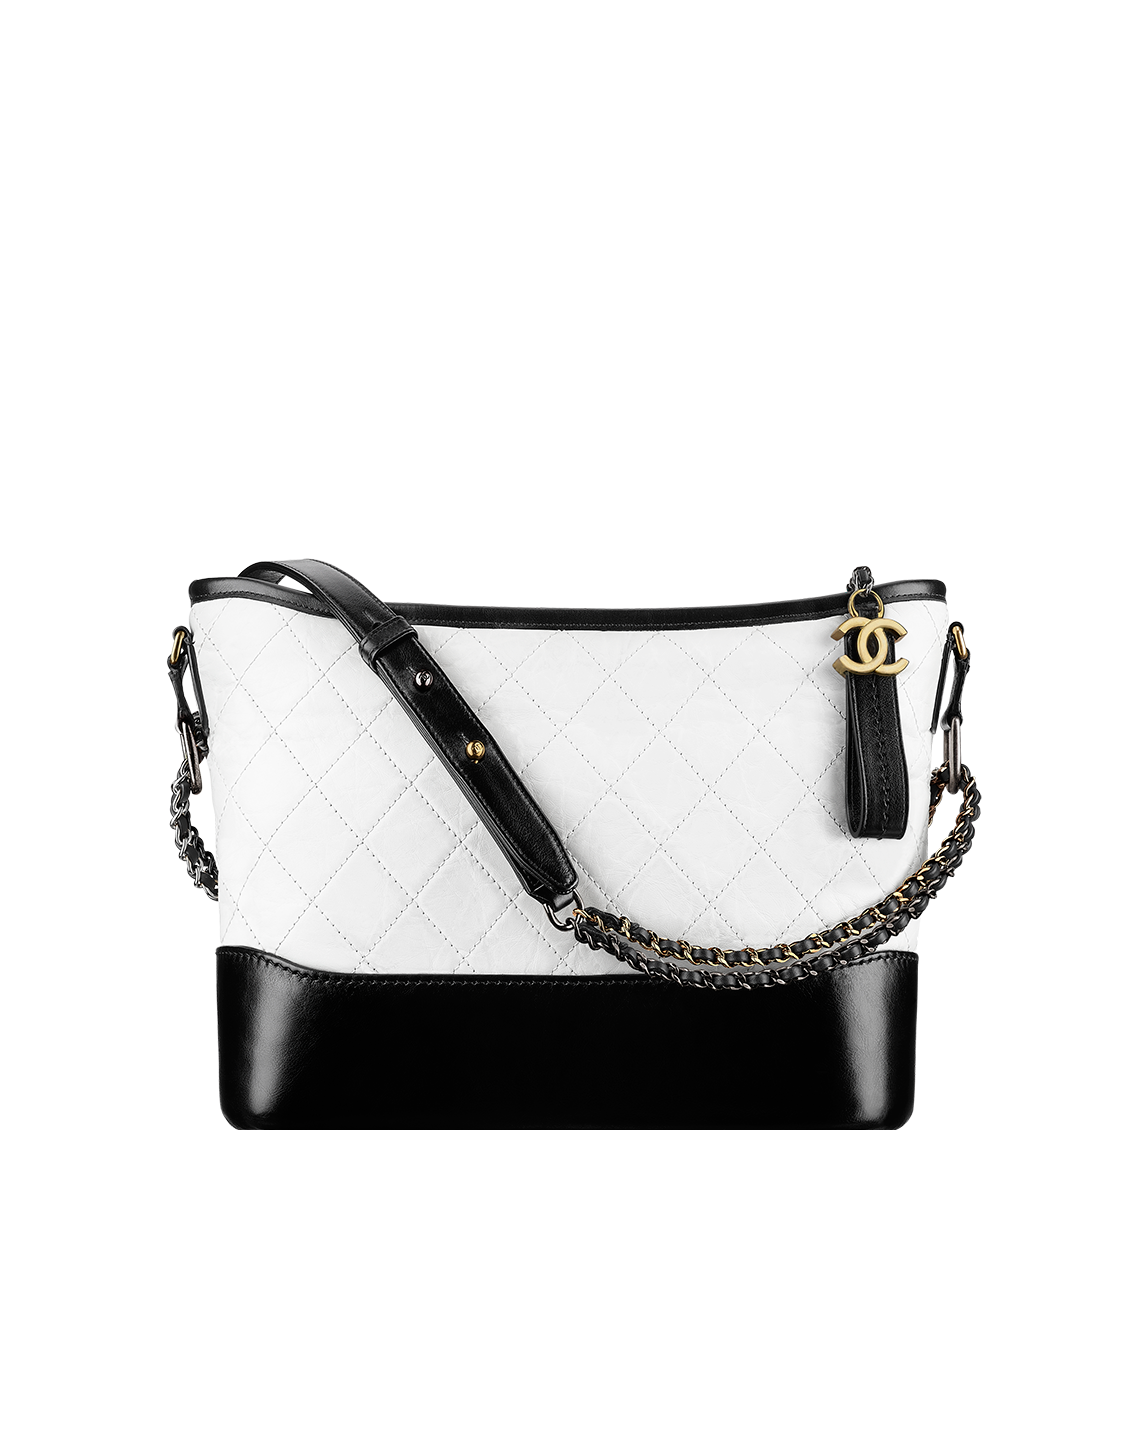 Handbag Bag Fashion Chanel Hobo HQ Image Free PNG Clipart